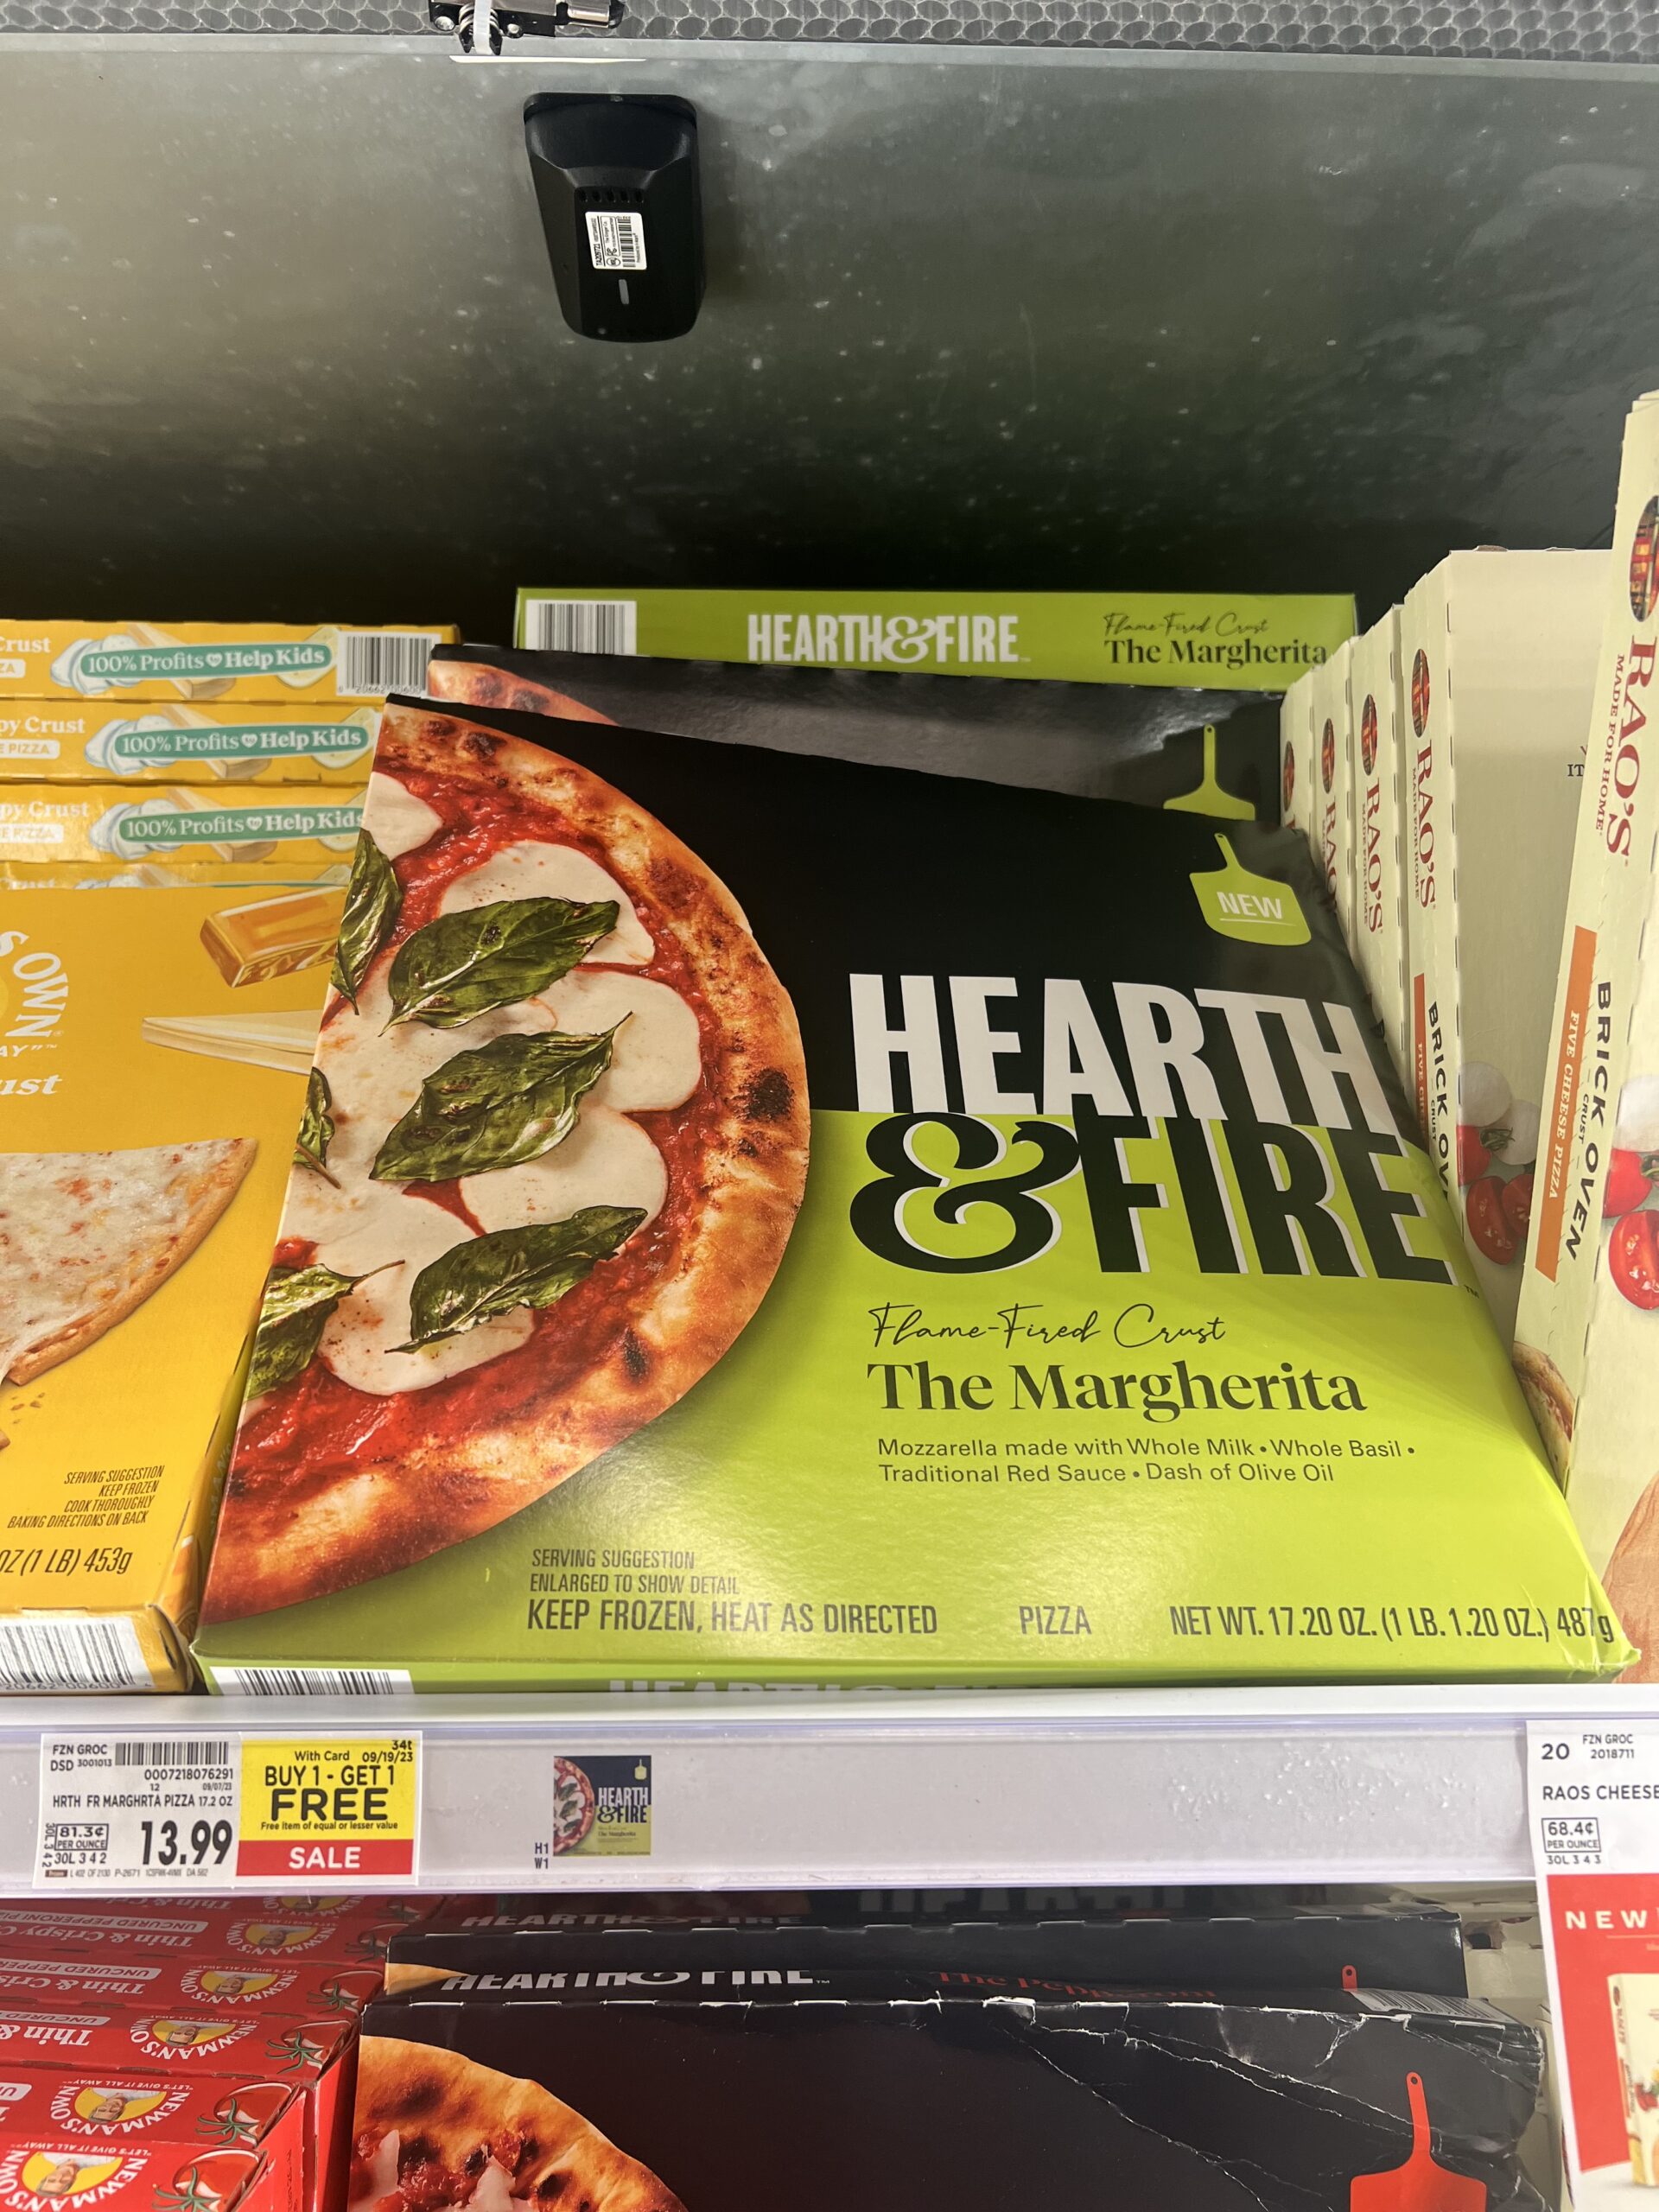 hearth & fire pizza kroger shelf image 1